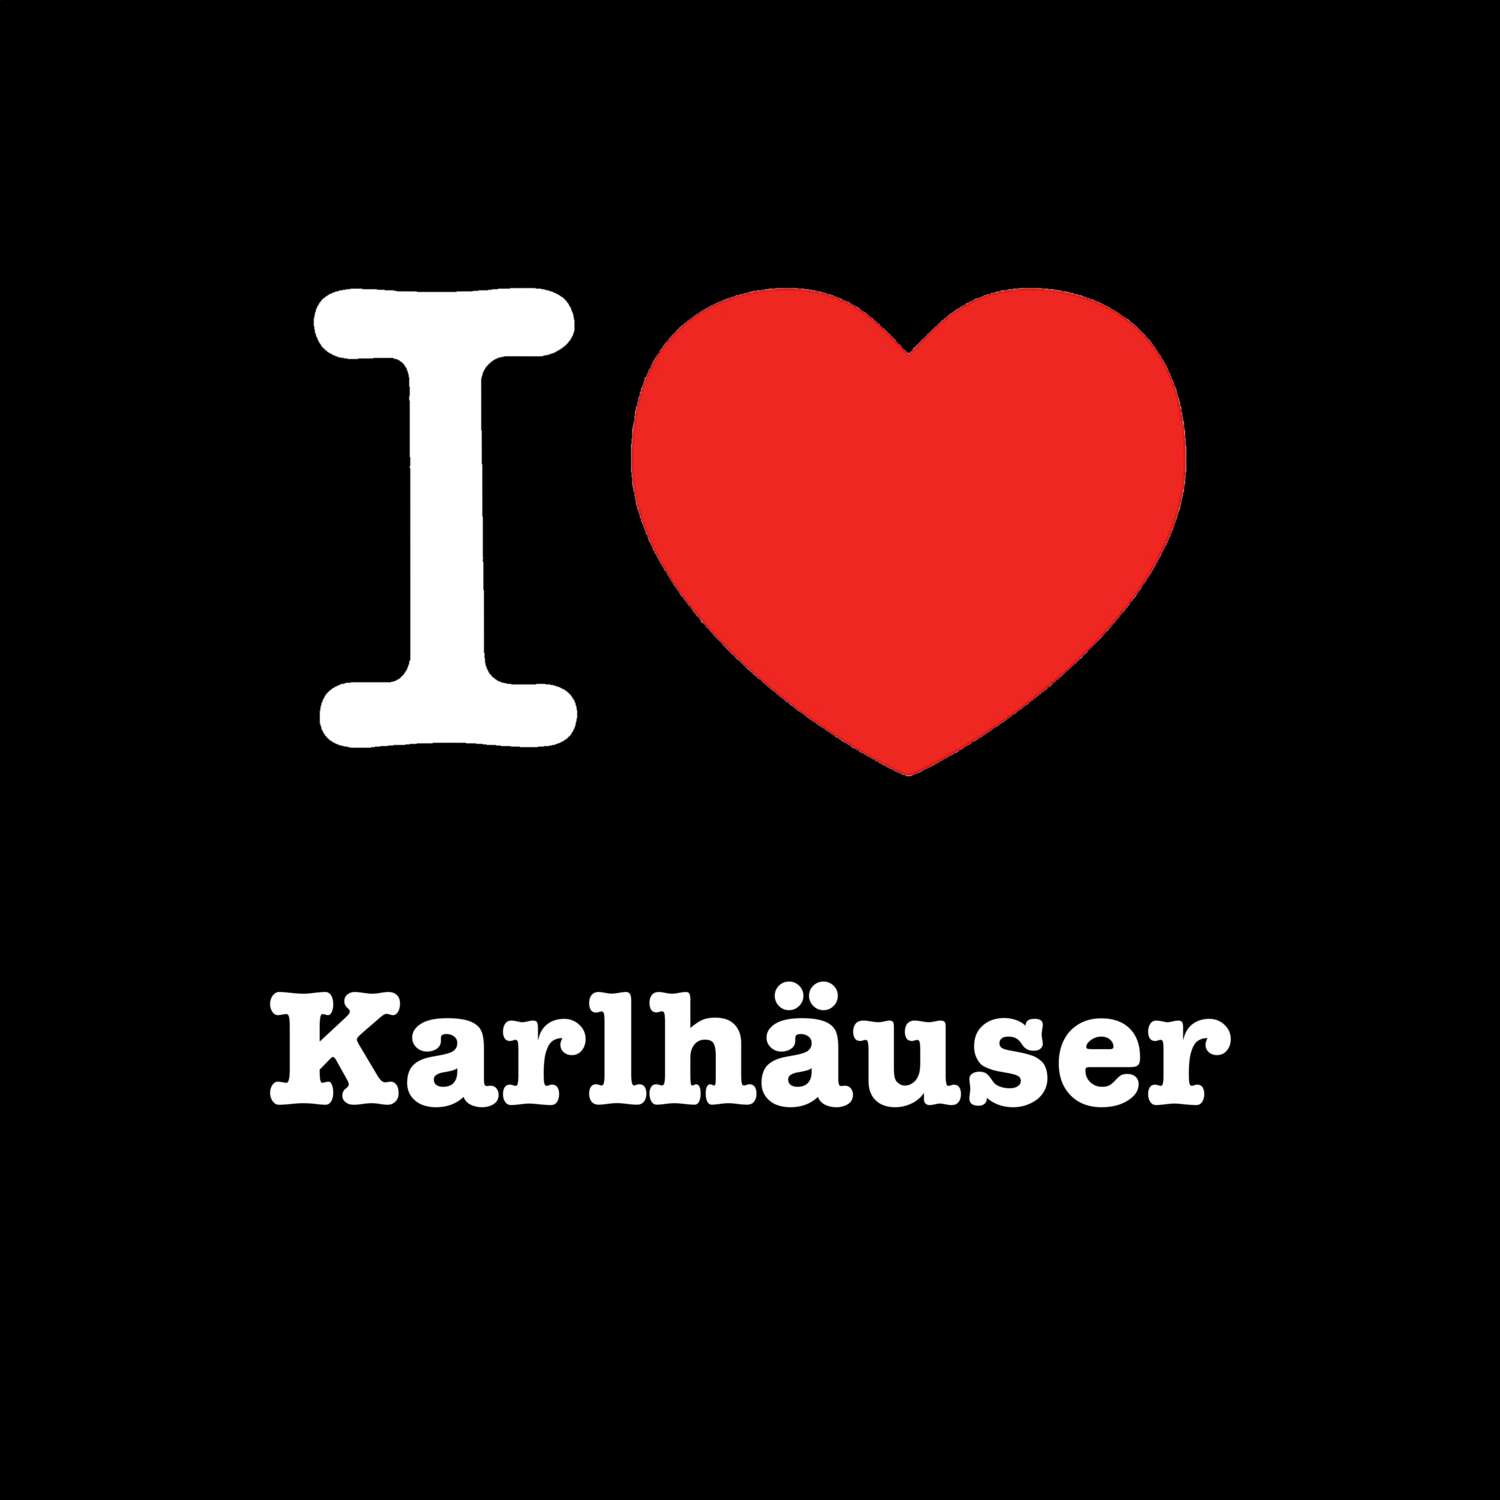 Karlhäuser T-Shirt »I love«